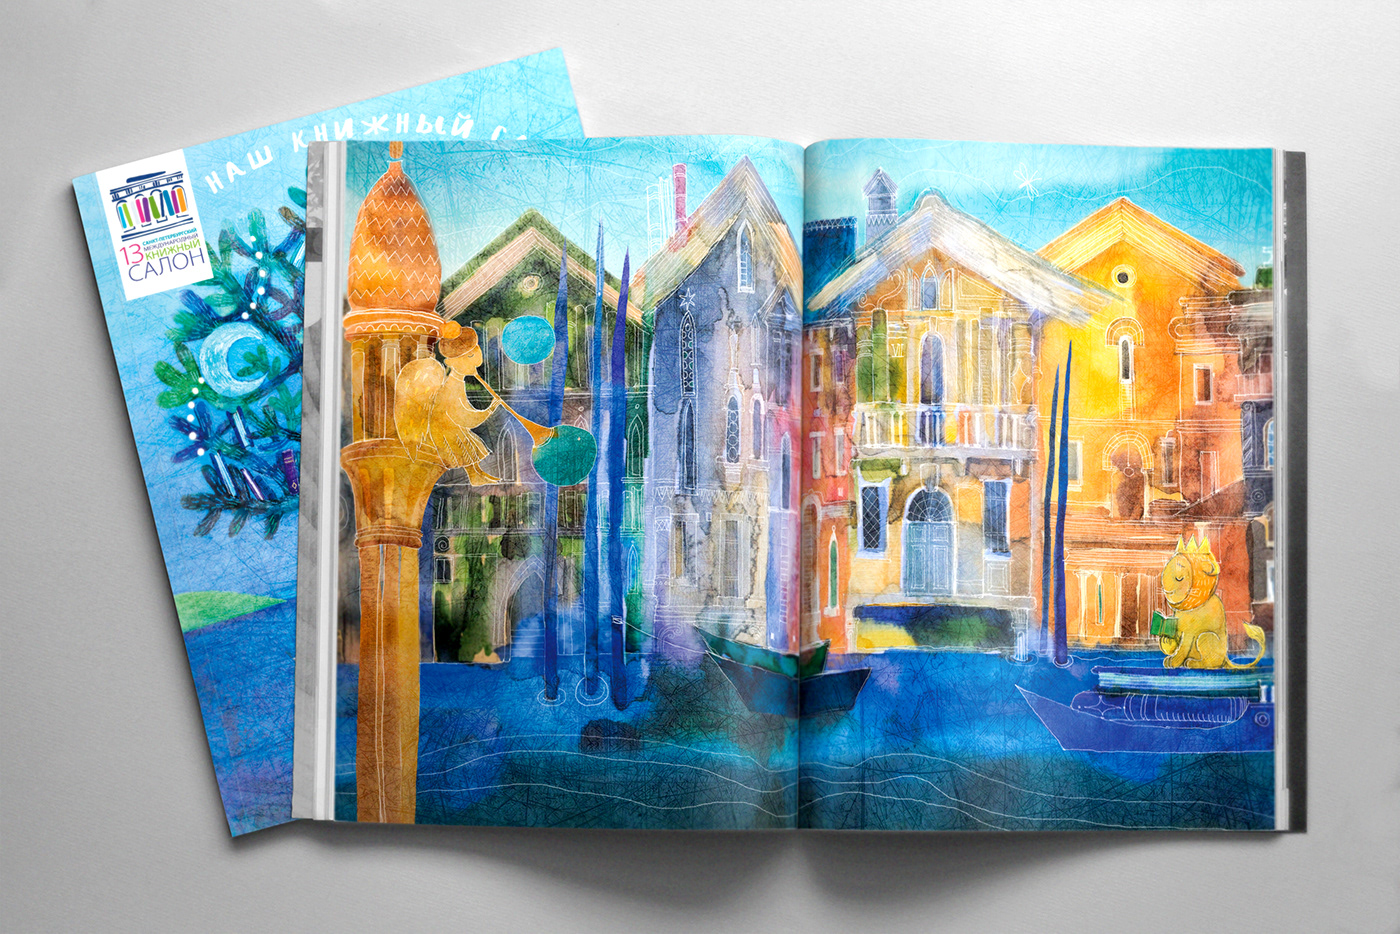 Watercolours scenery screens Venice St. Petersburg Book Fair Наш Книжный Сад лод Книжный Салон